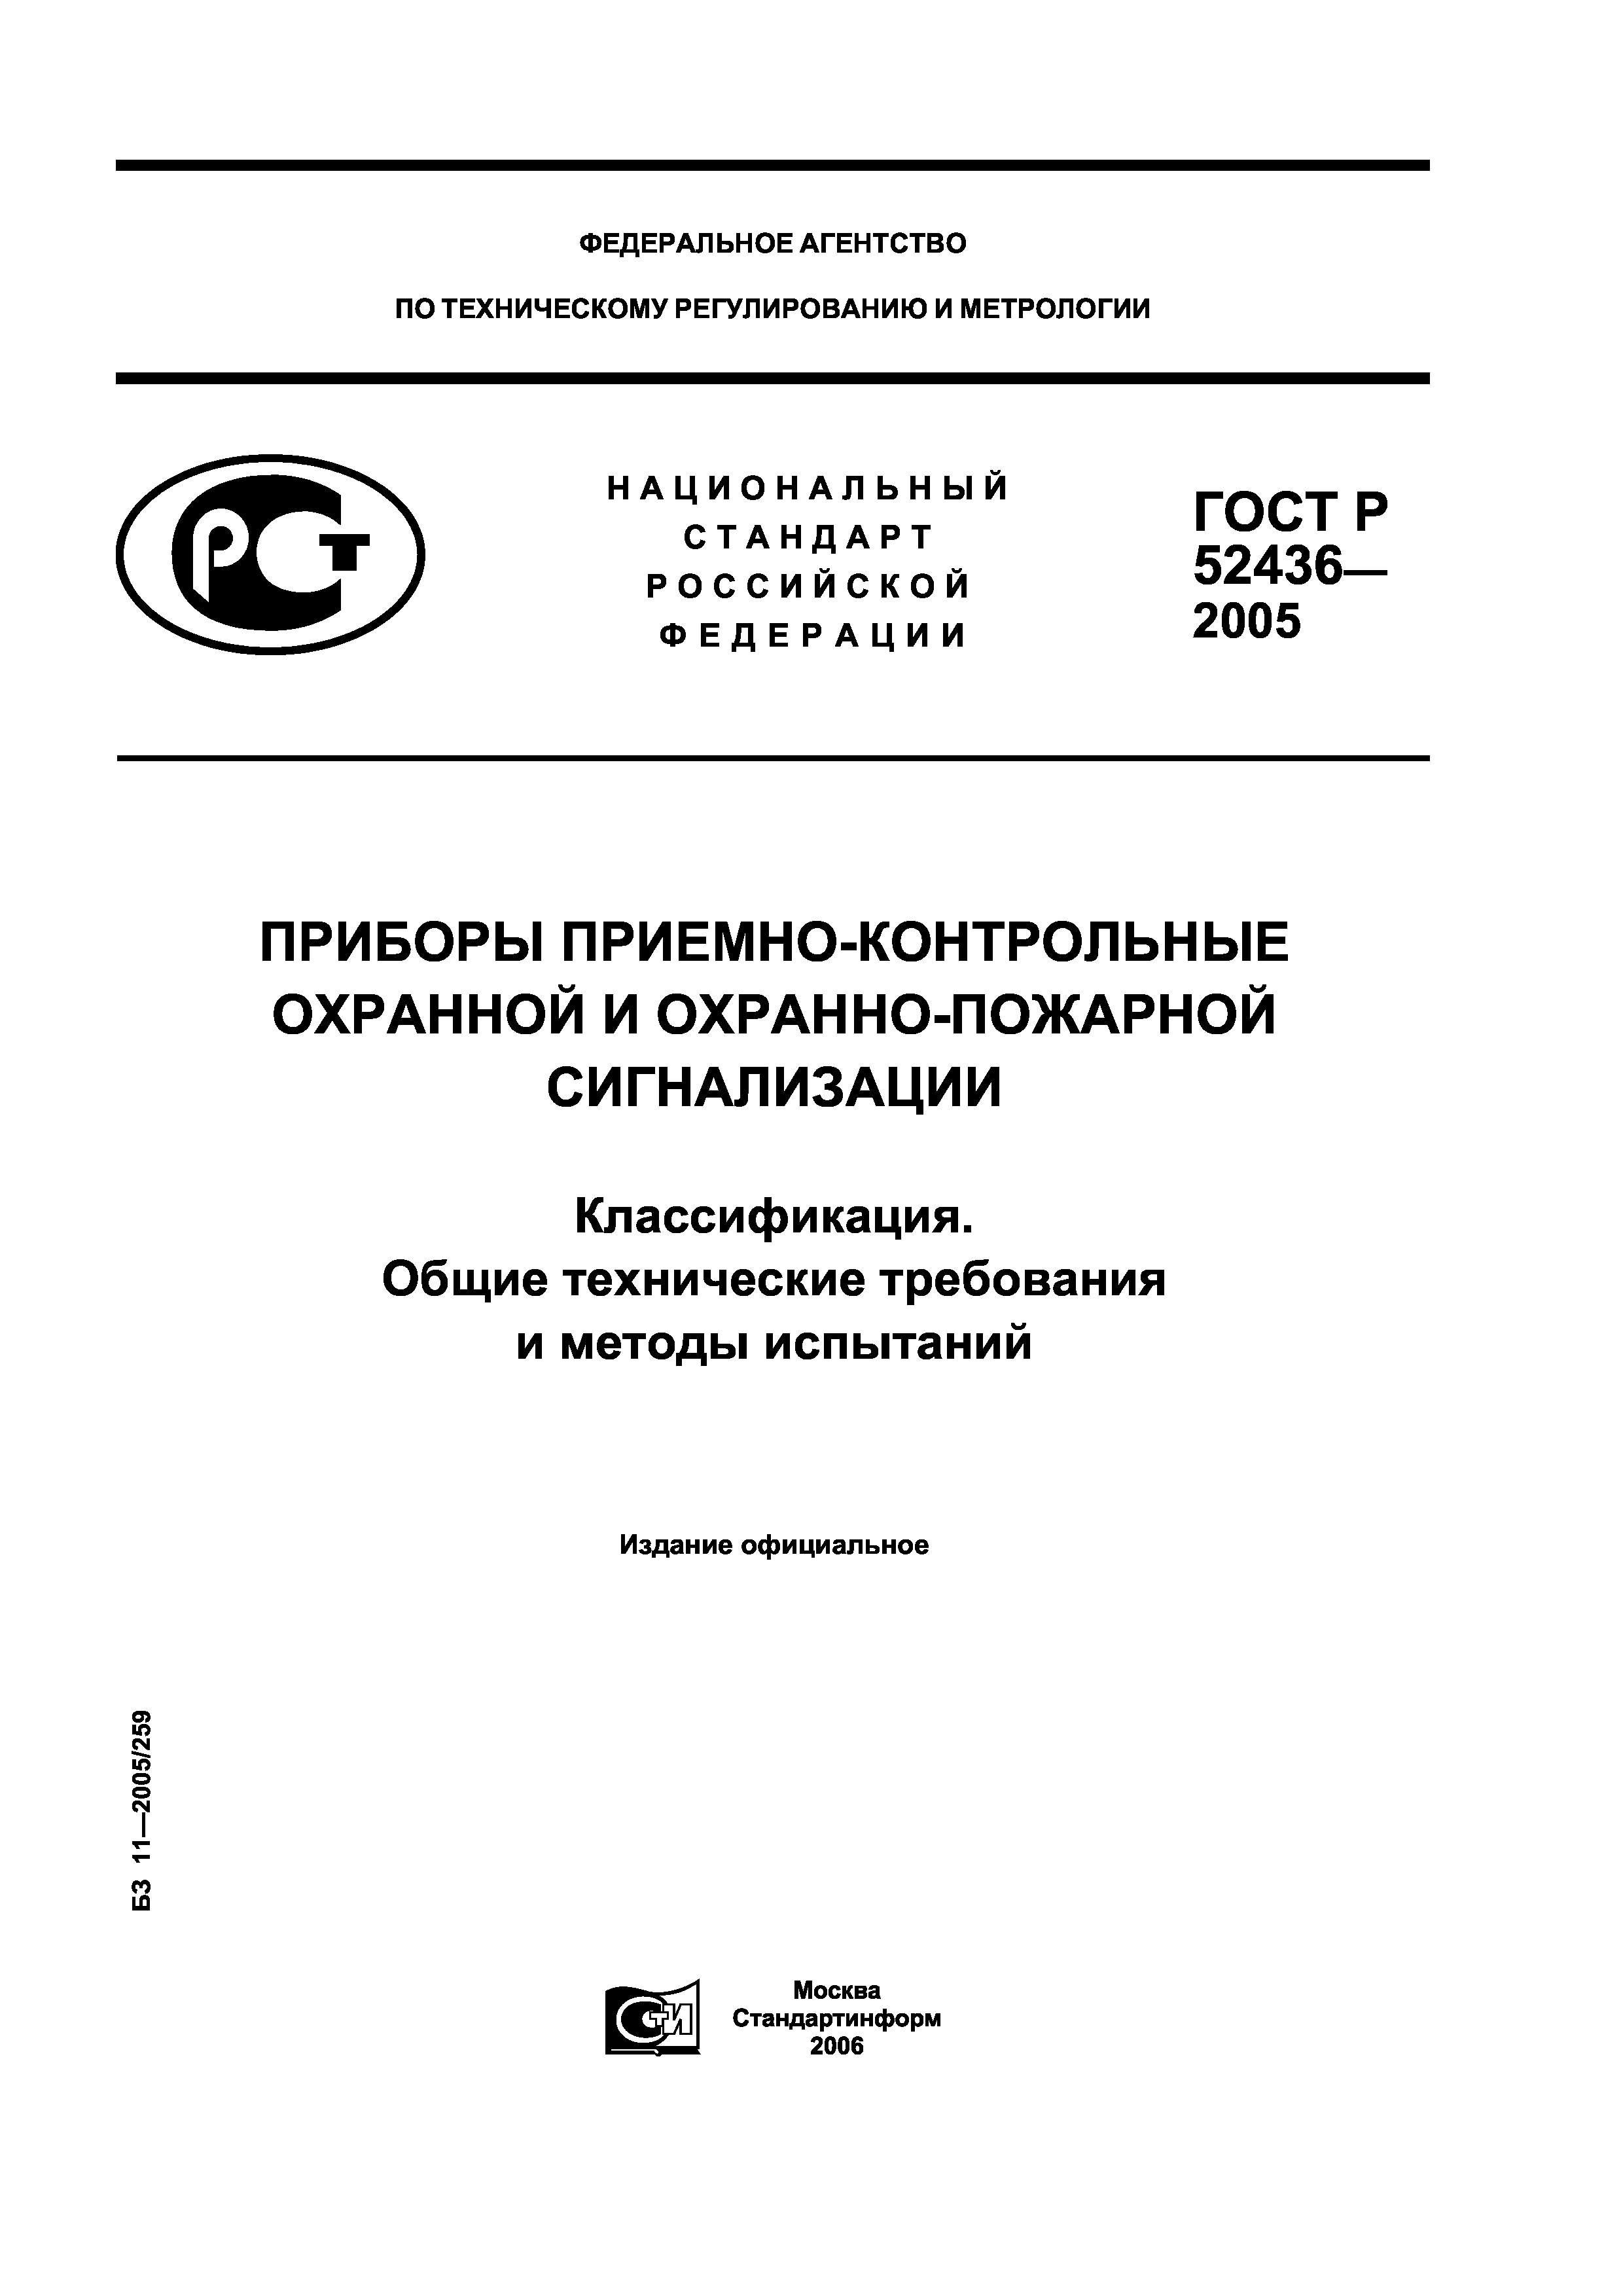 ГОСТ Р 52436-2005